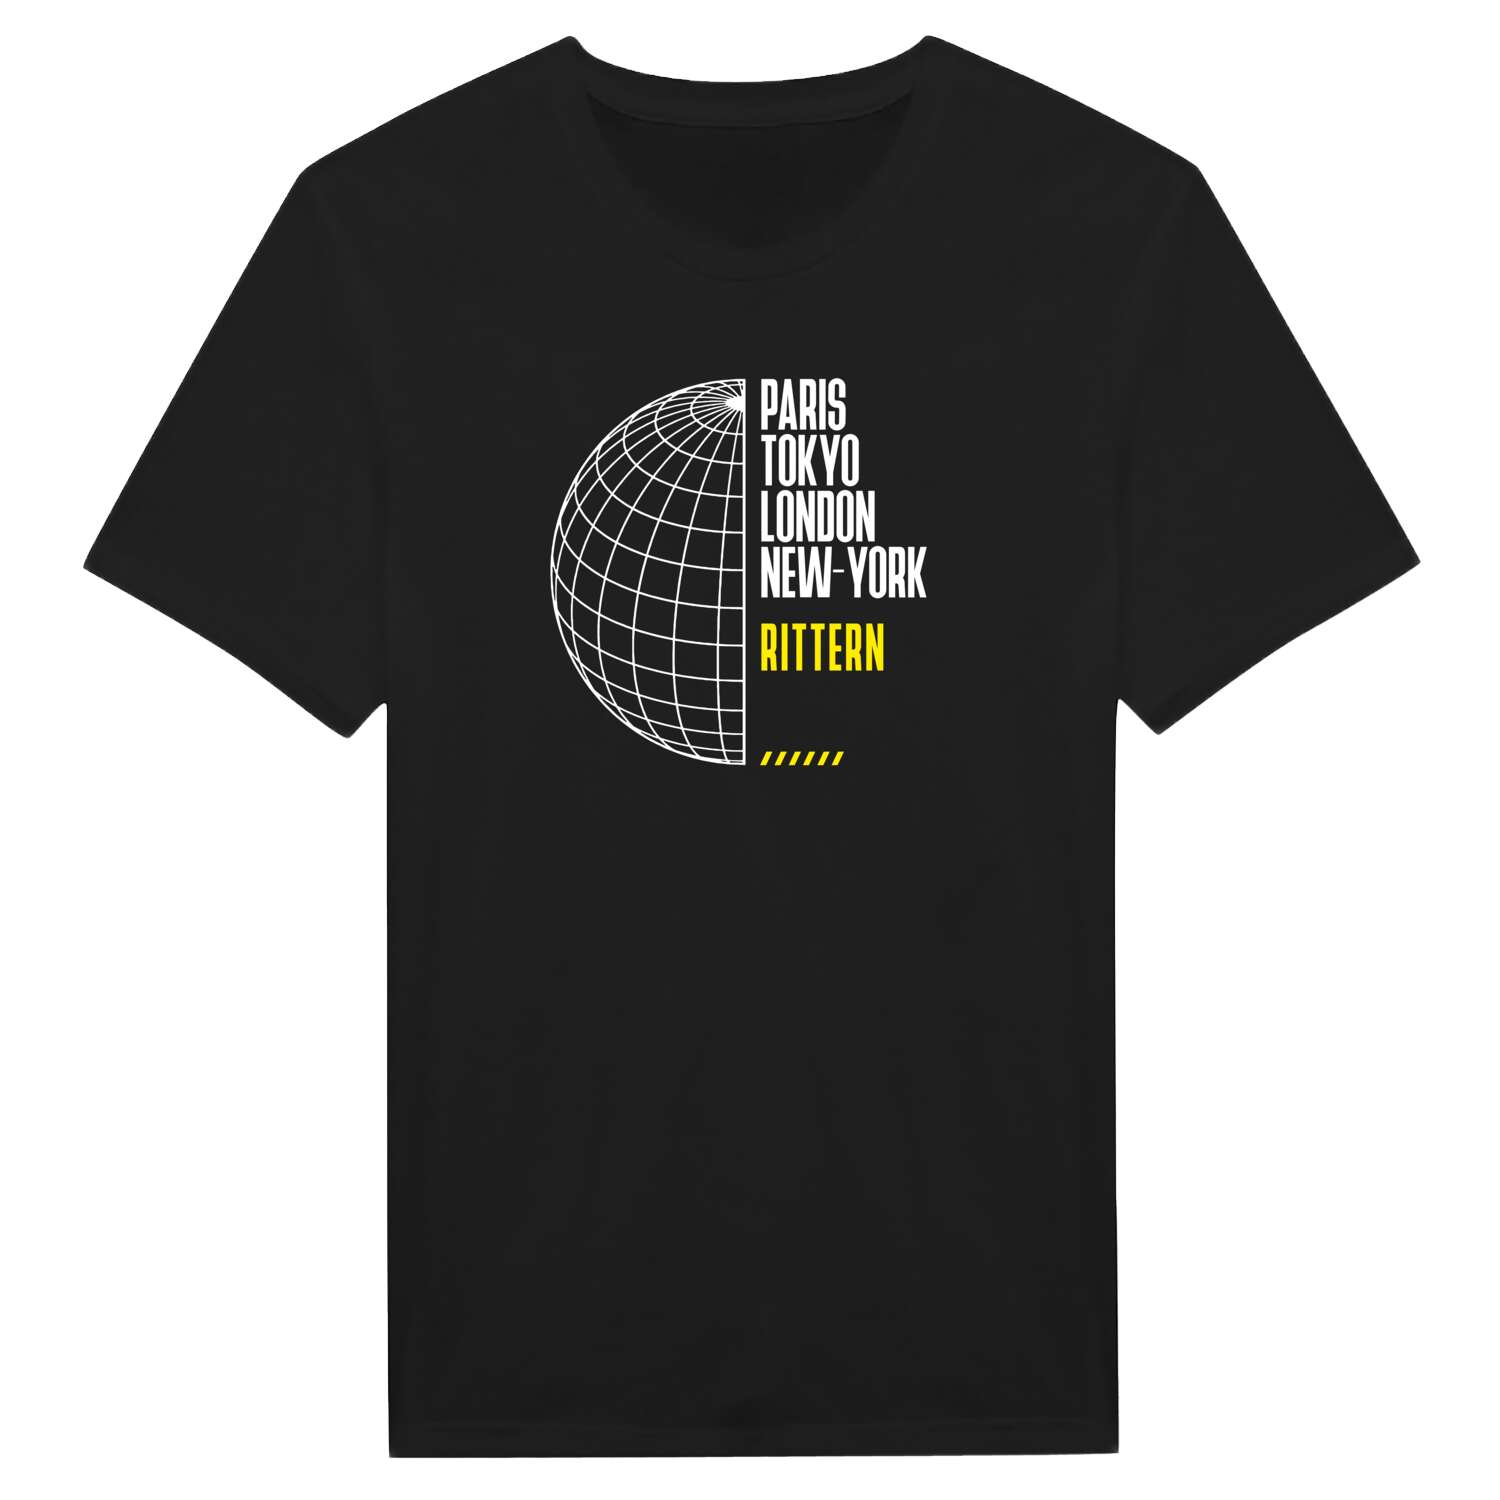 Rittern T-Shirt »Paris Tokyo London«